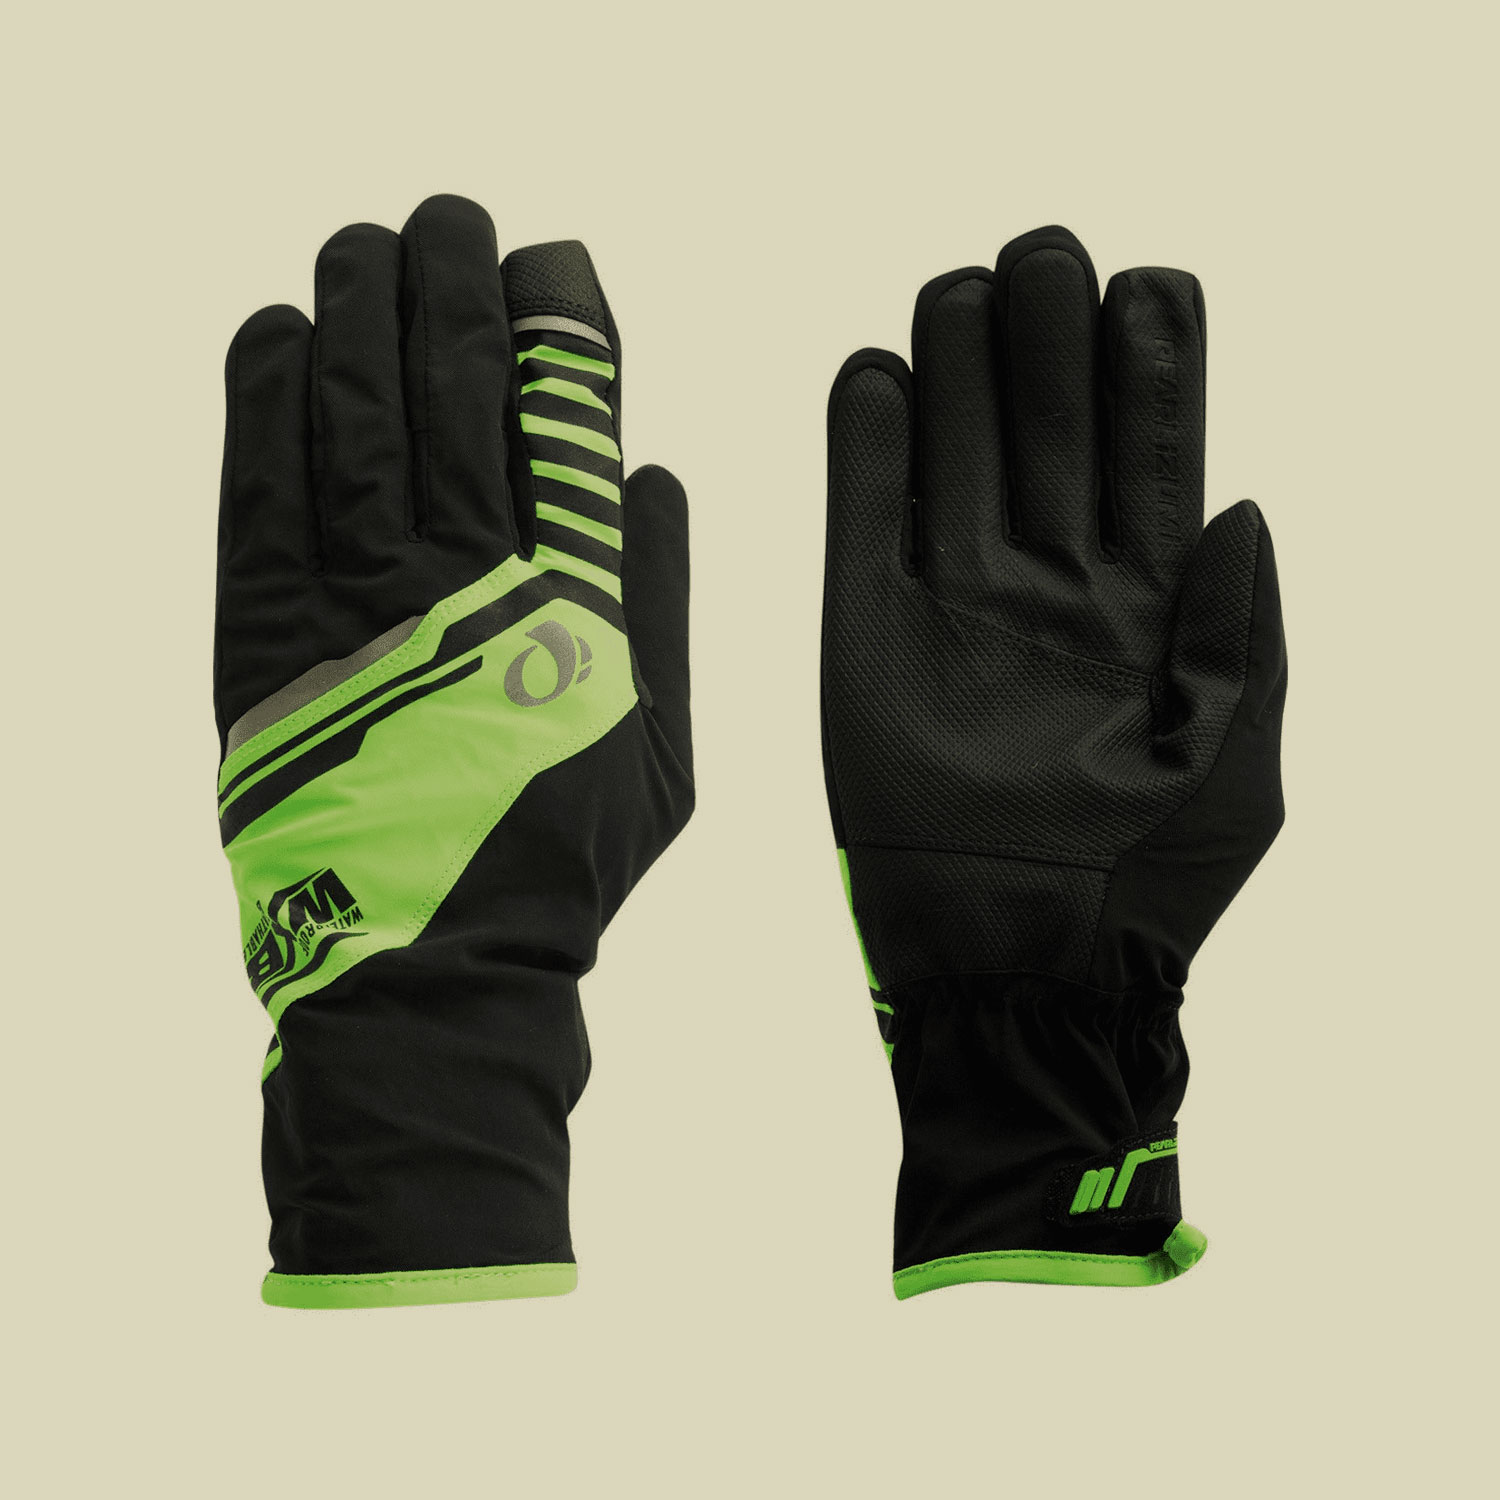 Pro Barrier WxB Glove Größe L Farbe black